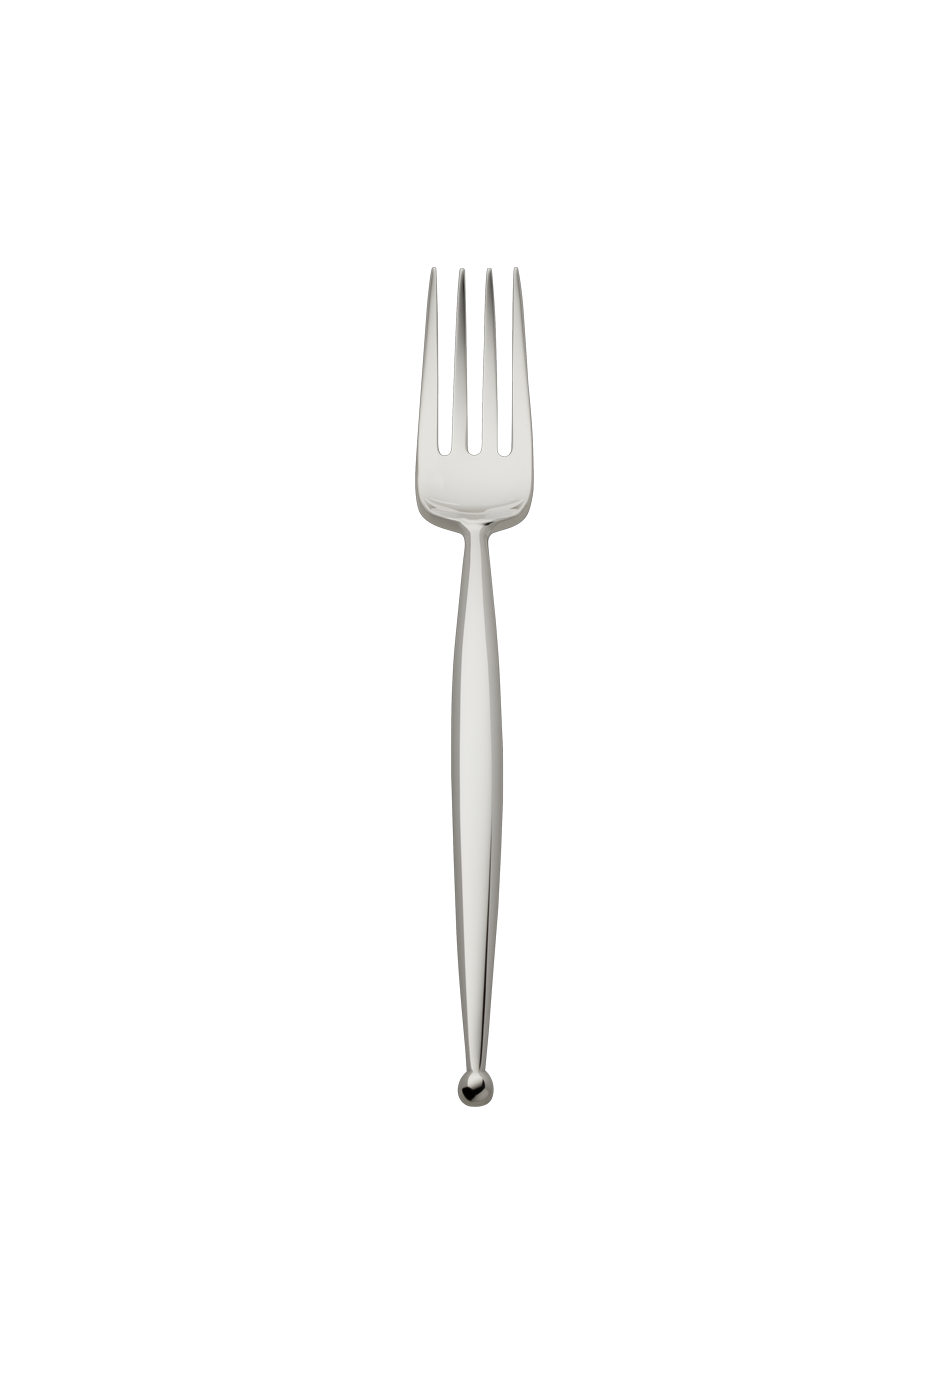 Gio Dessert Fork (150g massive silverplated)